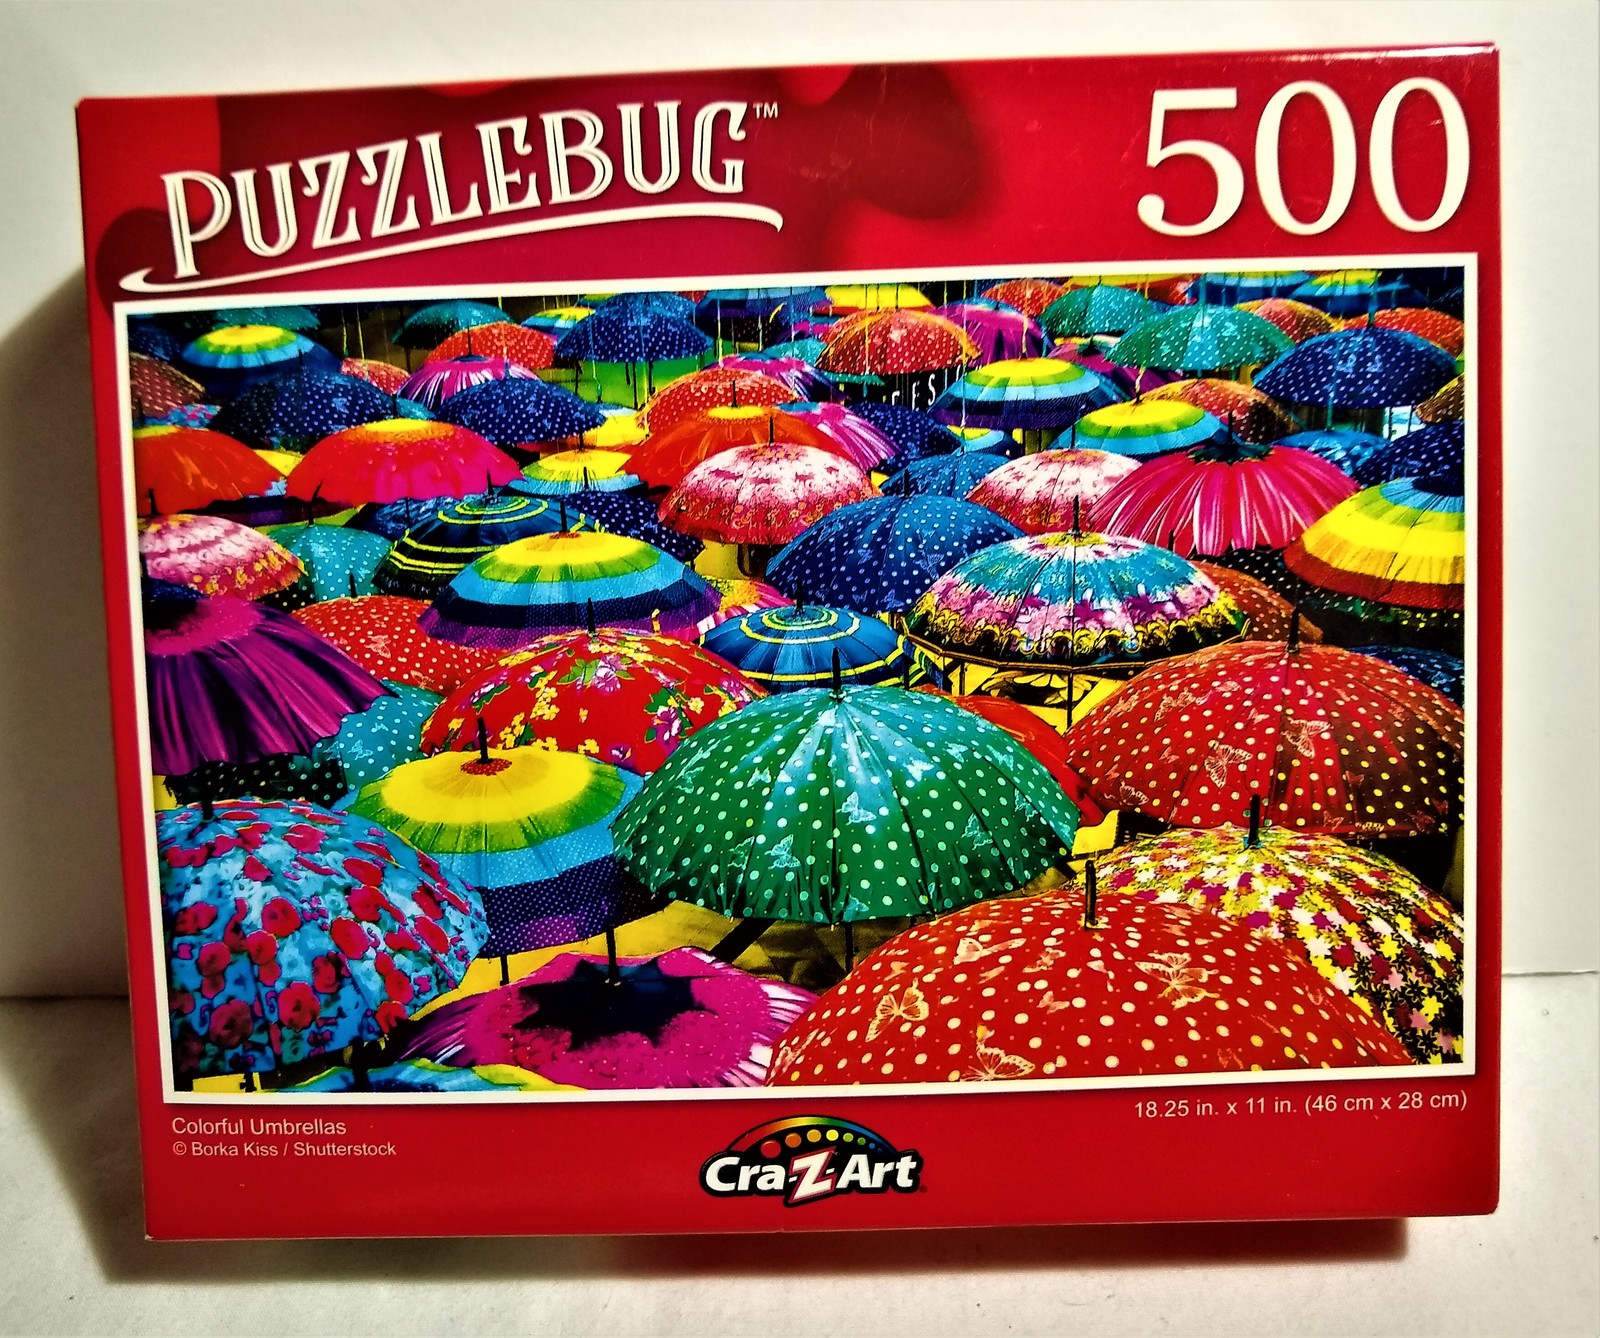 NEW Puzzlebug 500 Piece Jigsaw Puzzle ~ Colorful Umbrellas 